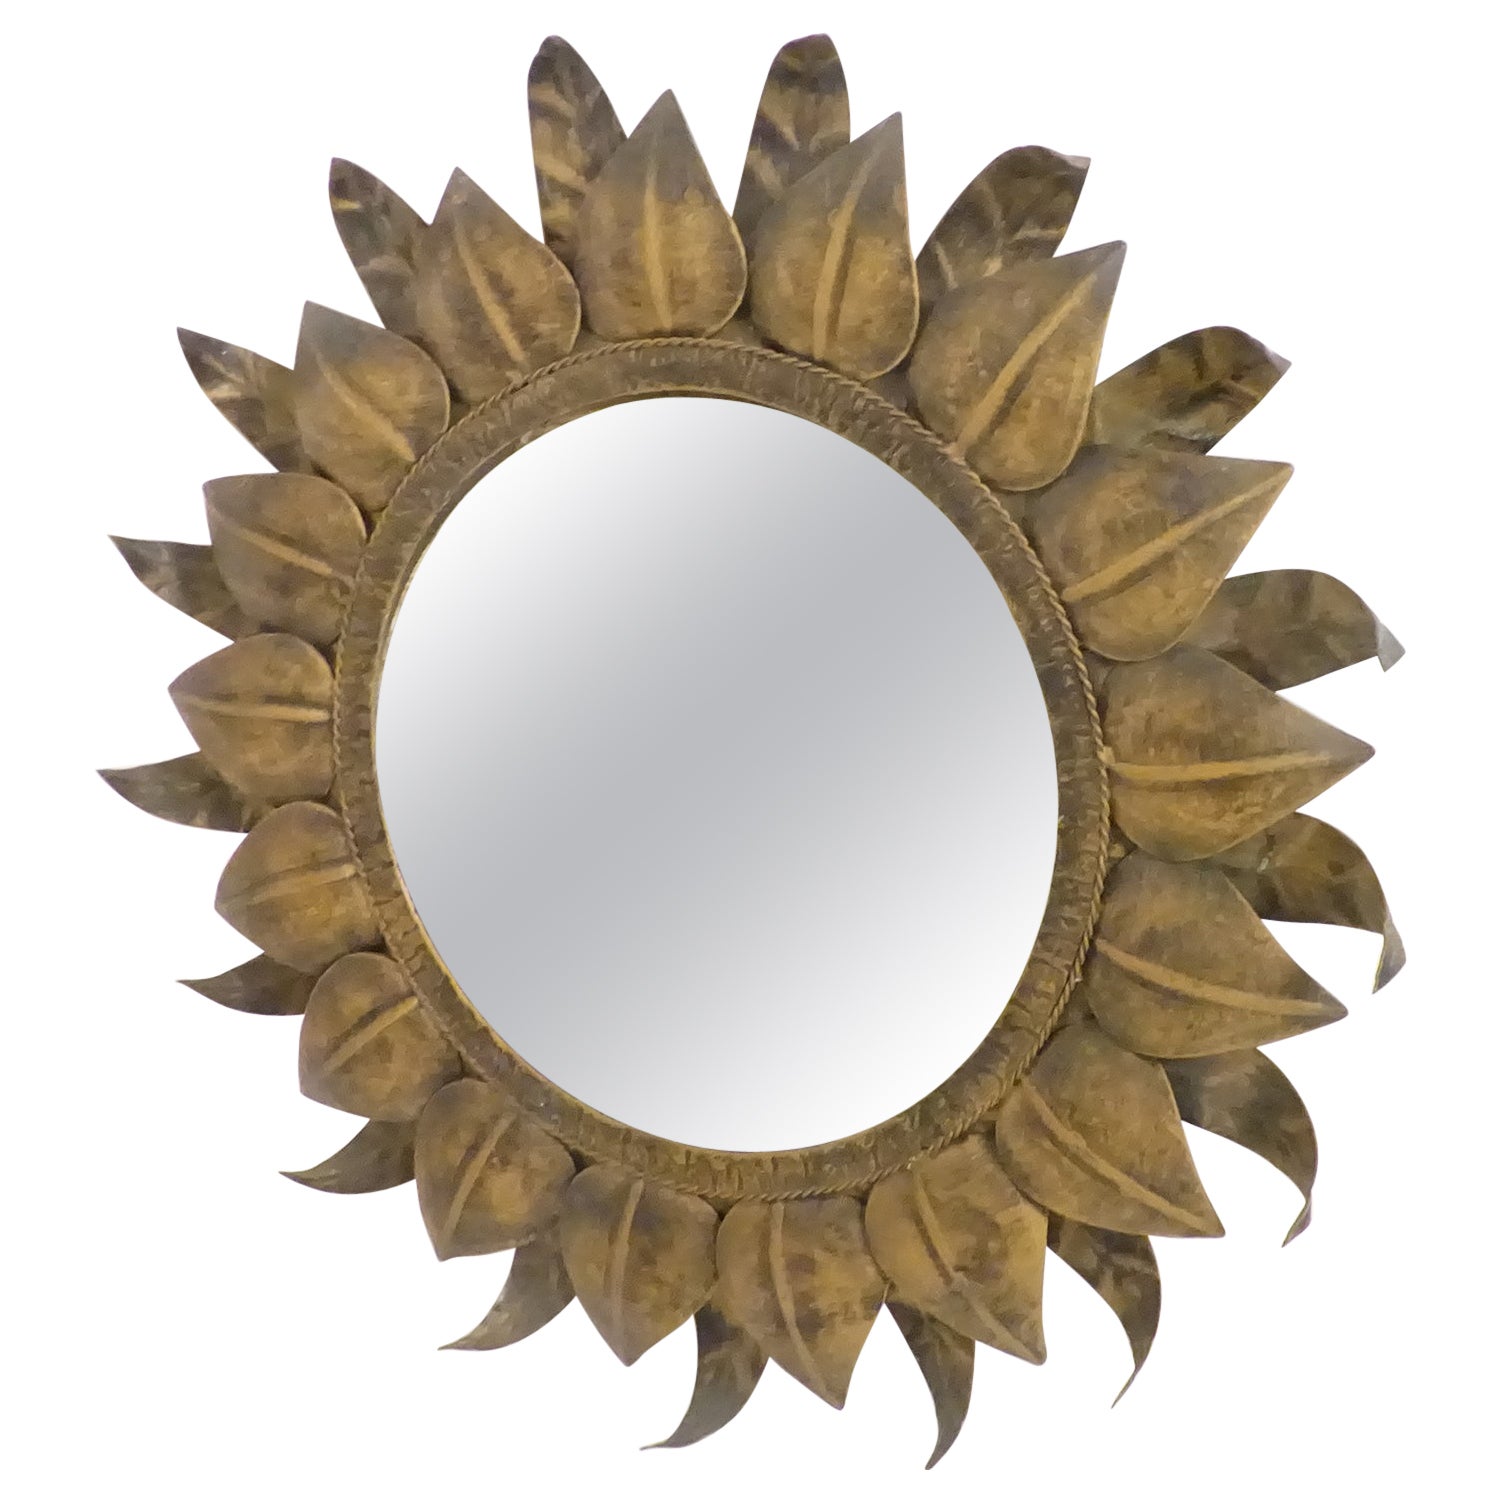 Spanish midcentury round metal mirror, 'circa 1960s For Sale